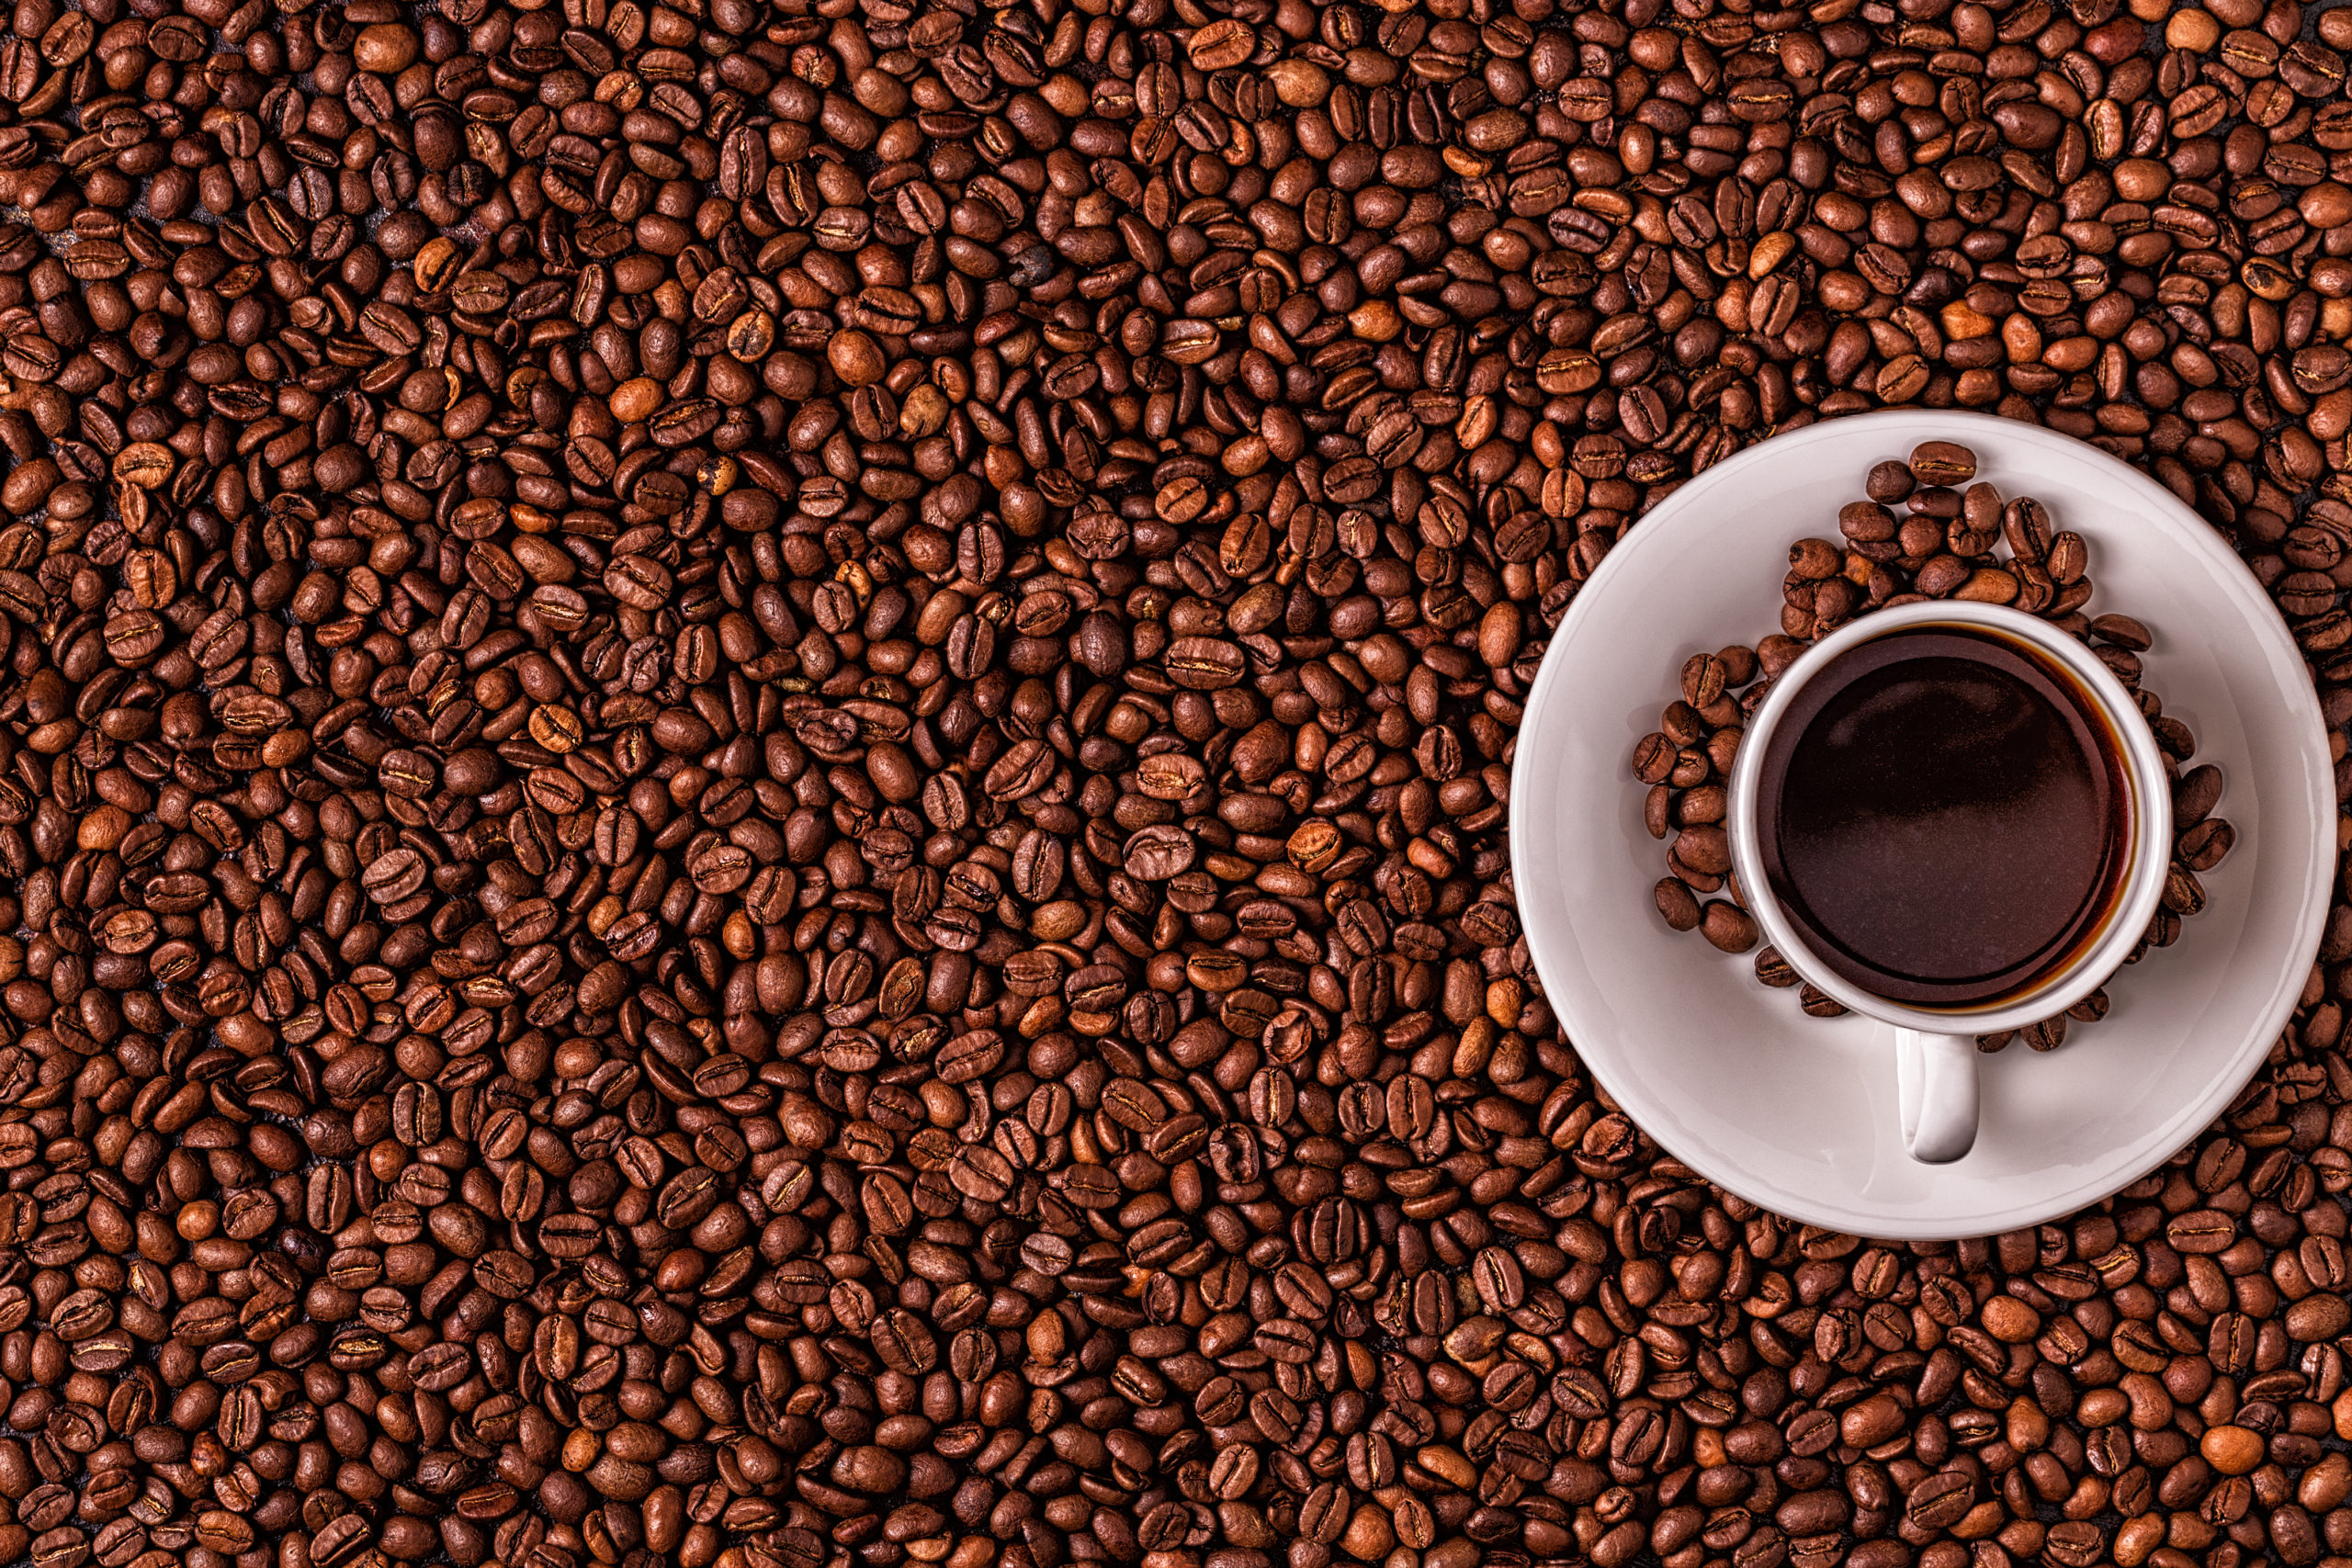 Delicioso e saudável: os benefícios do café para a saúde